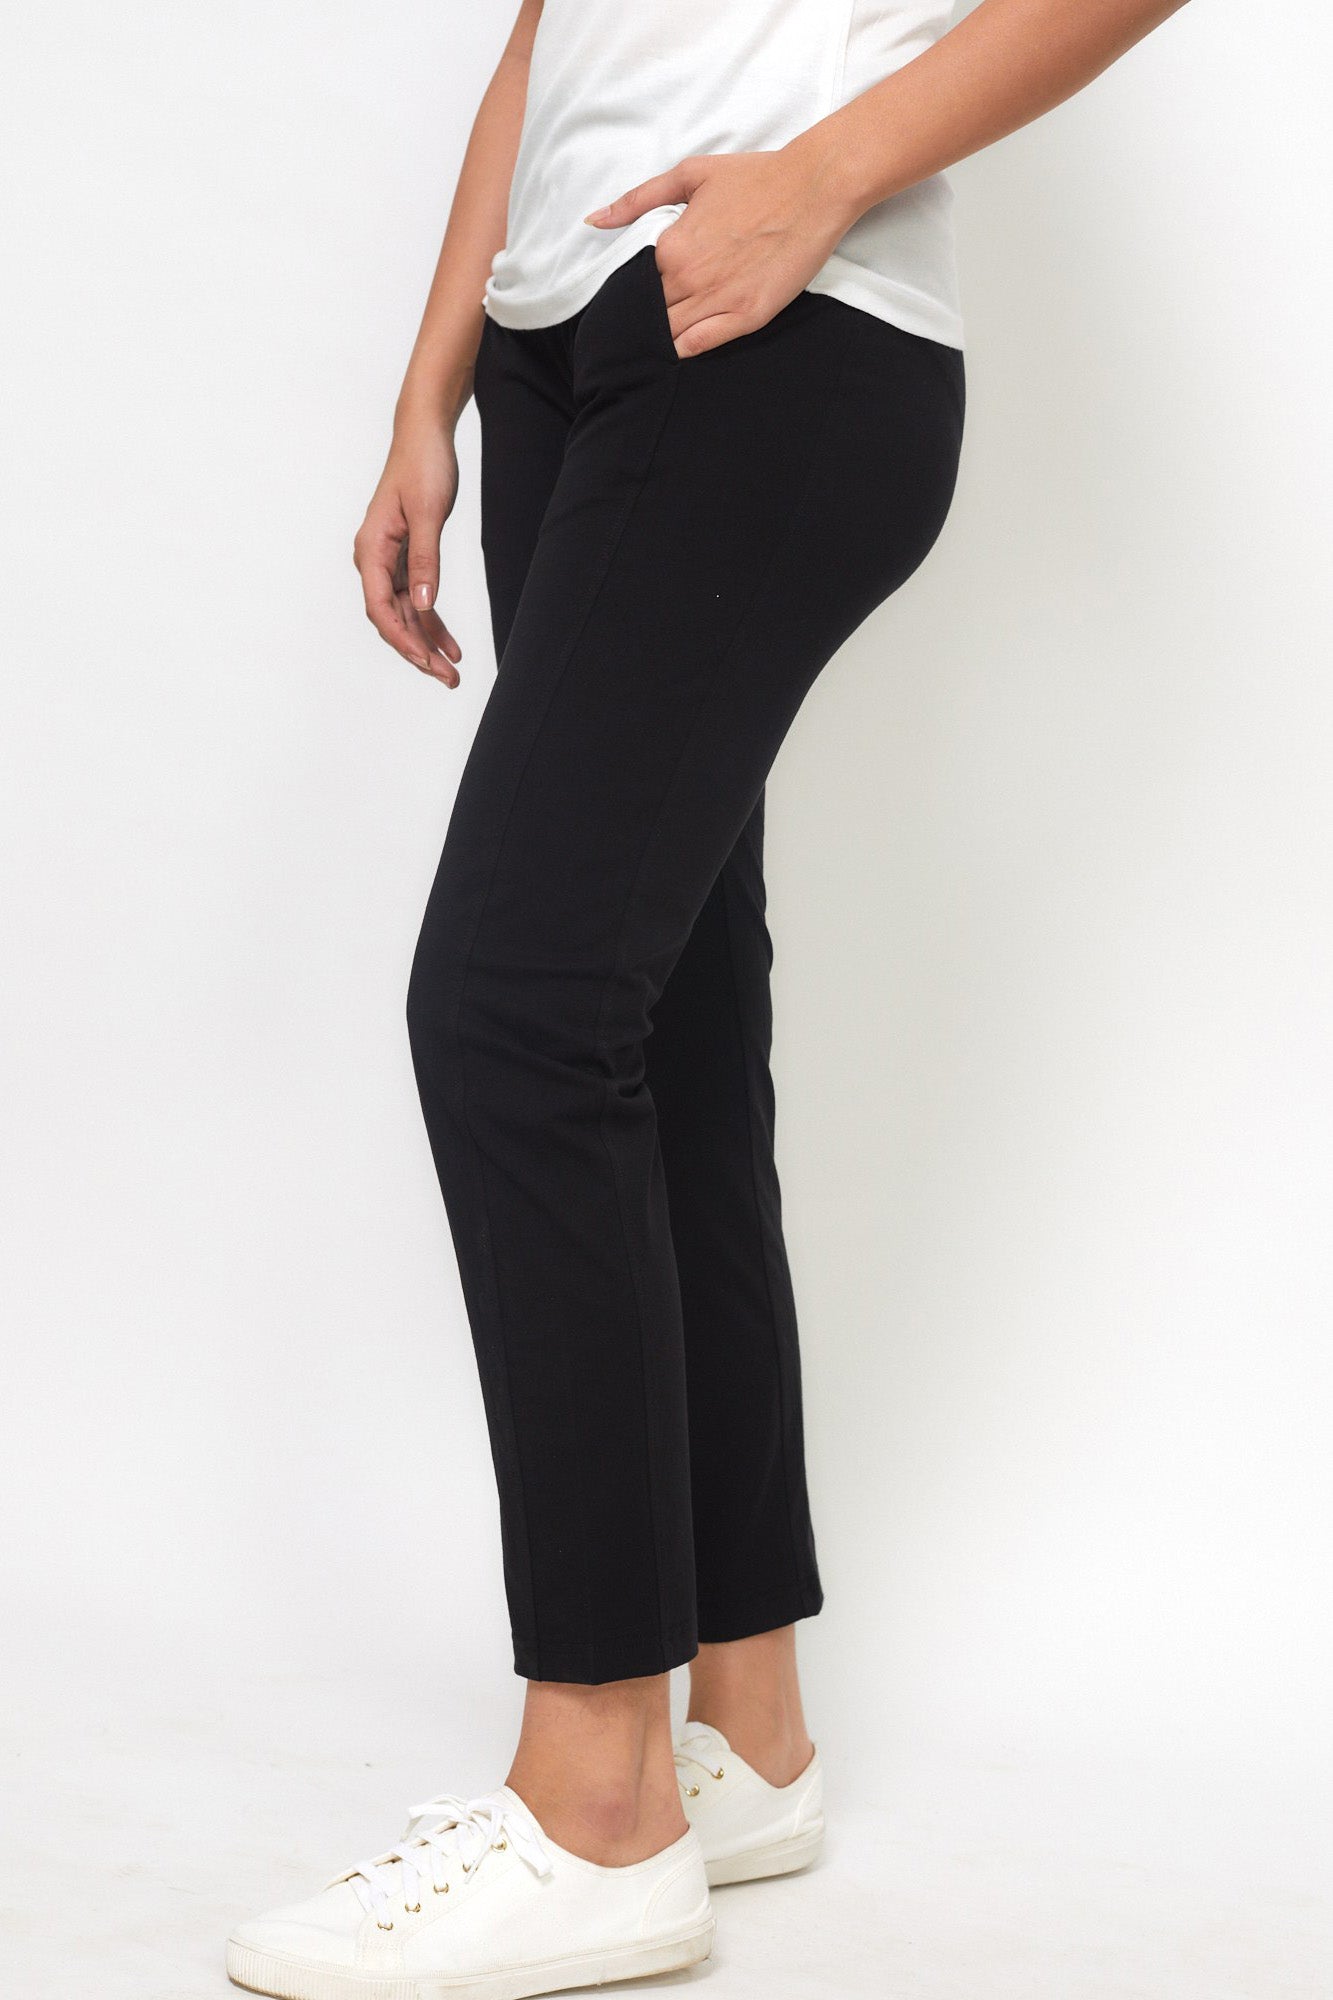 Buy Elleven Women Melange Jersey Pants, Grey, L at Amazon.in